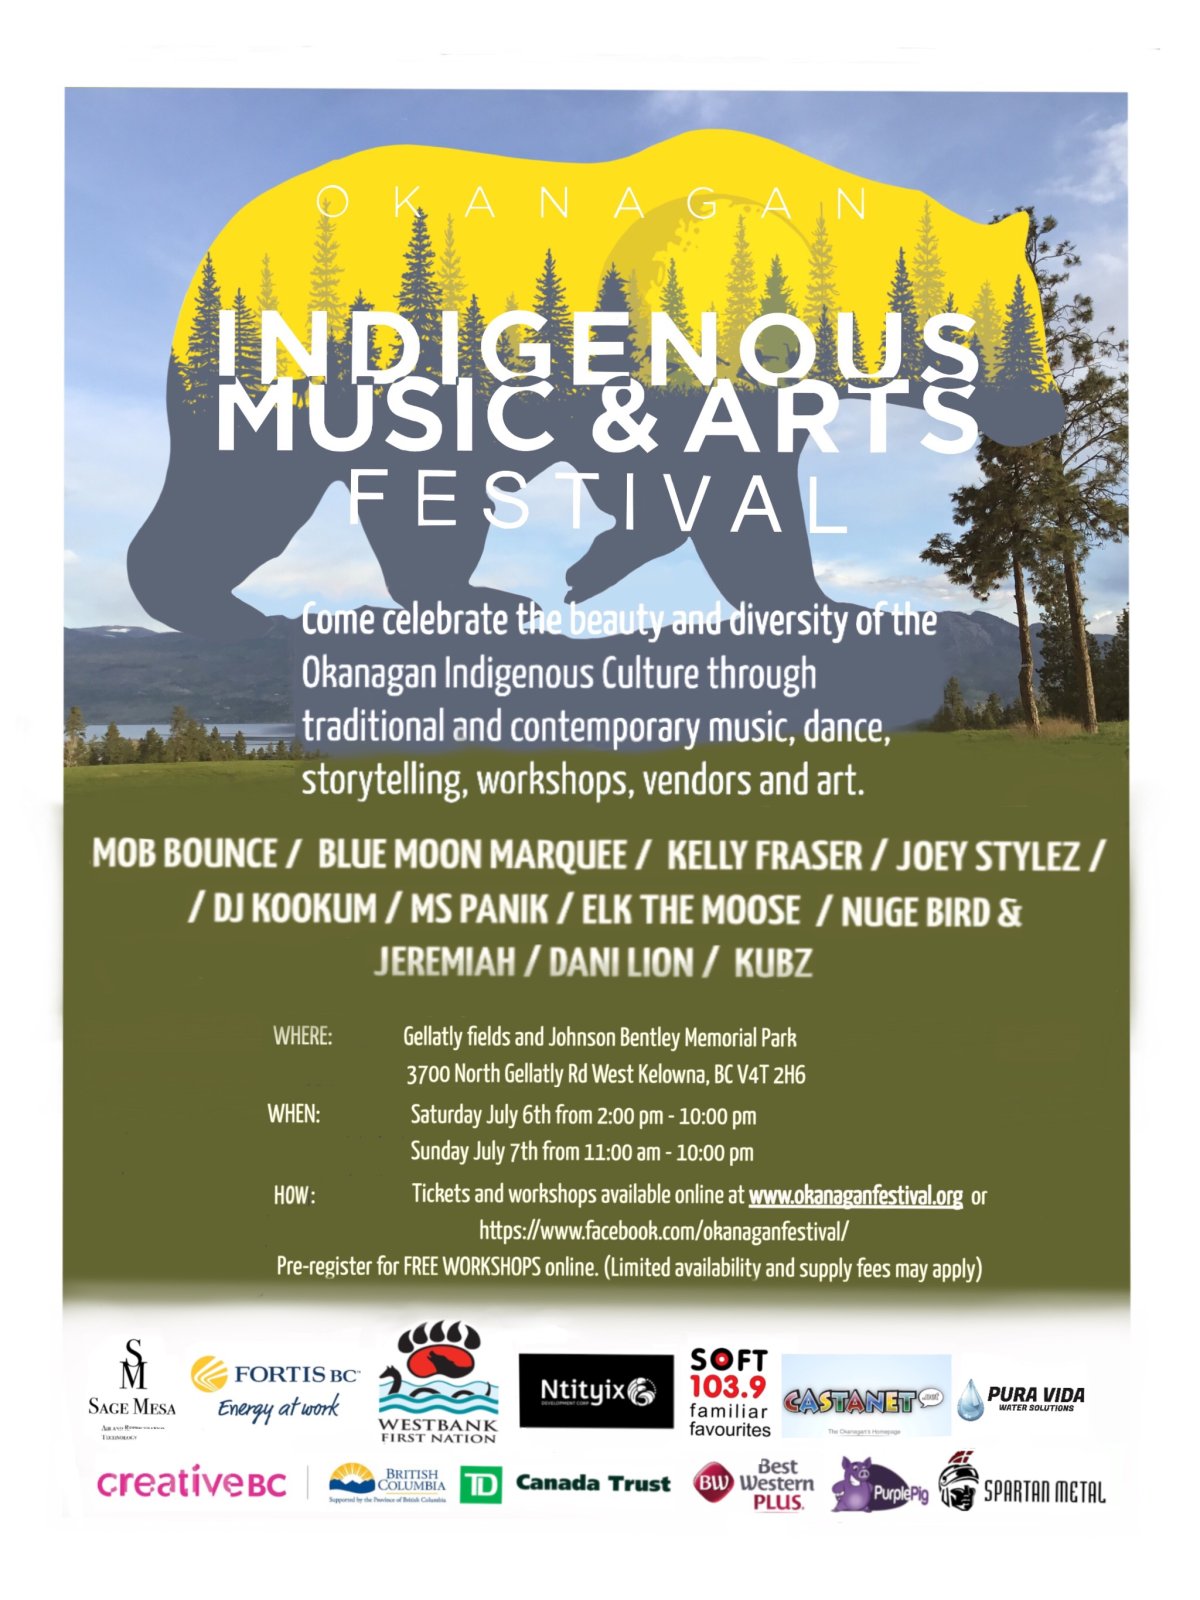 Okanagan Indigenous Music & Arts Festival - image